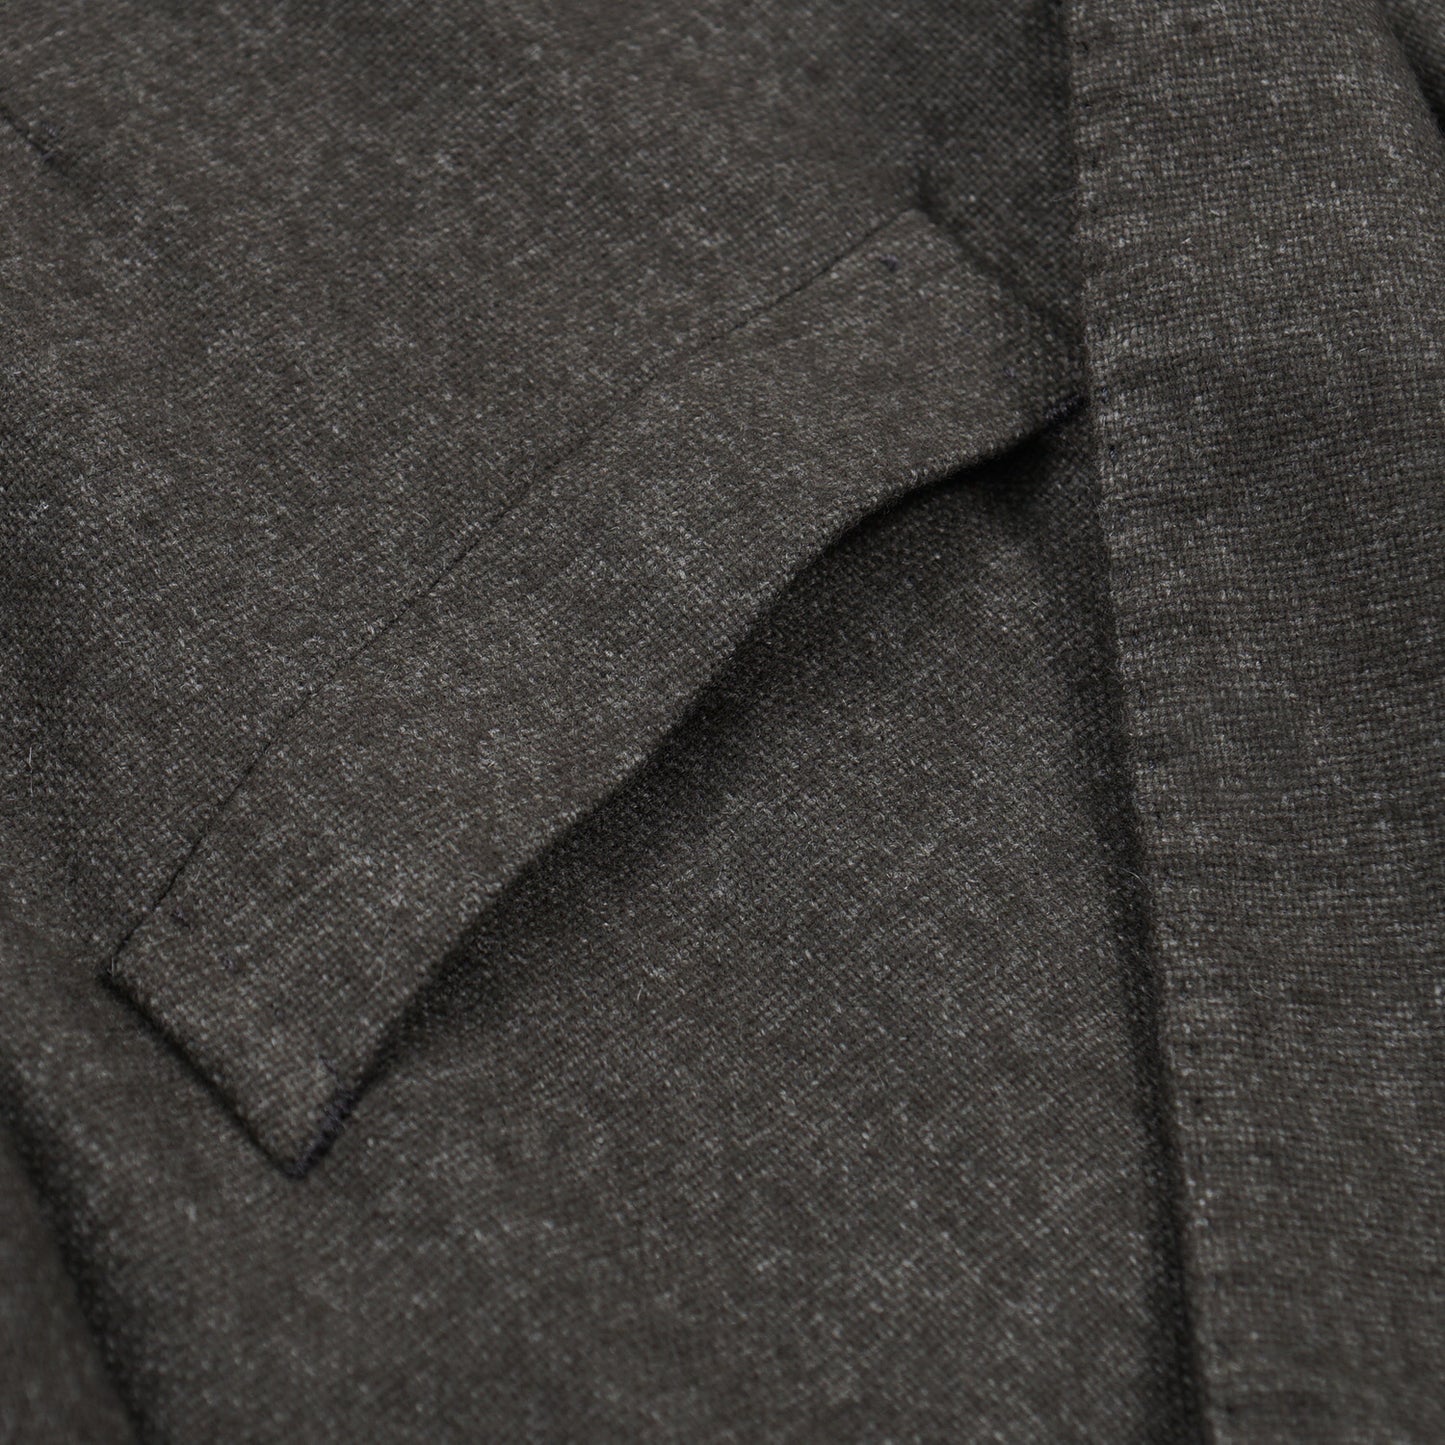 Boglioli Soft Wool 'K Jacket' Sport Coat - Top Shelf Apparel